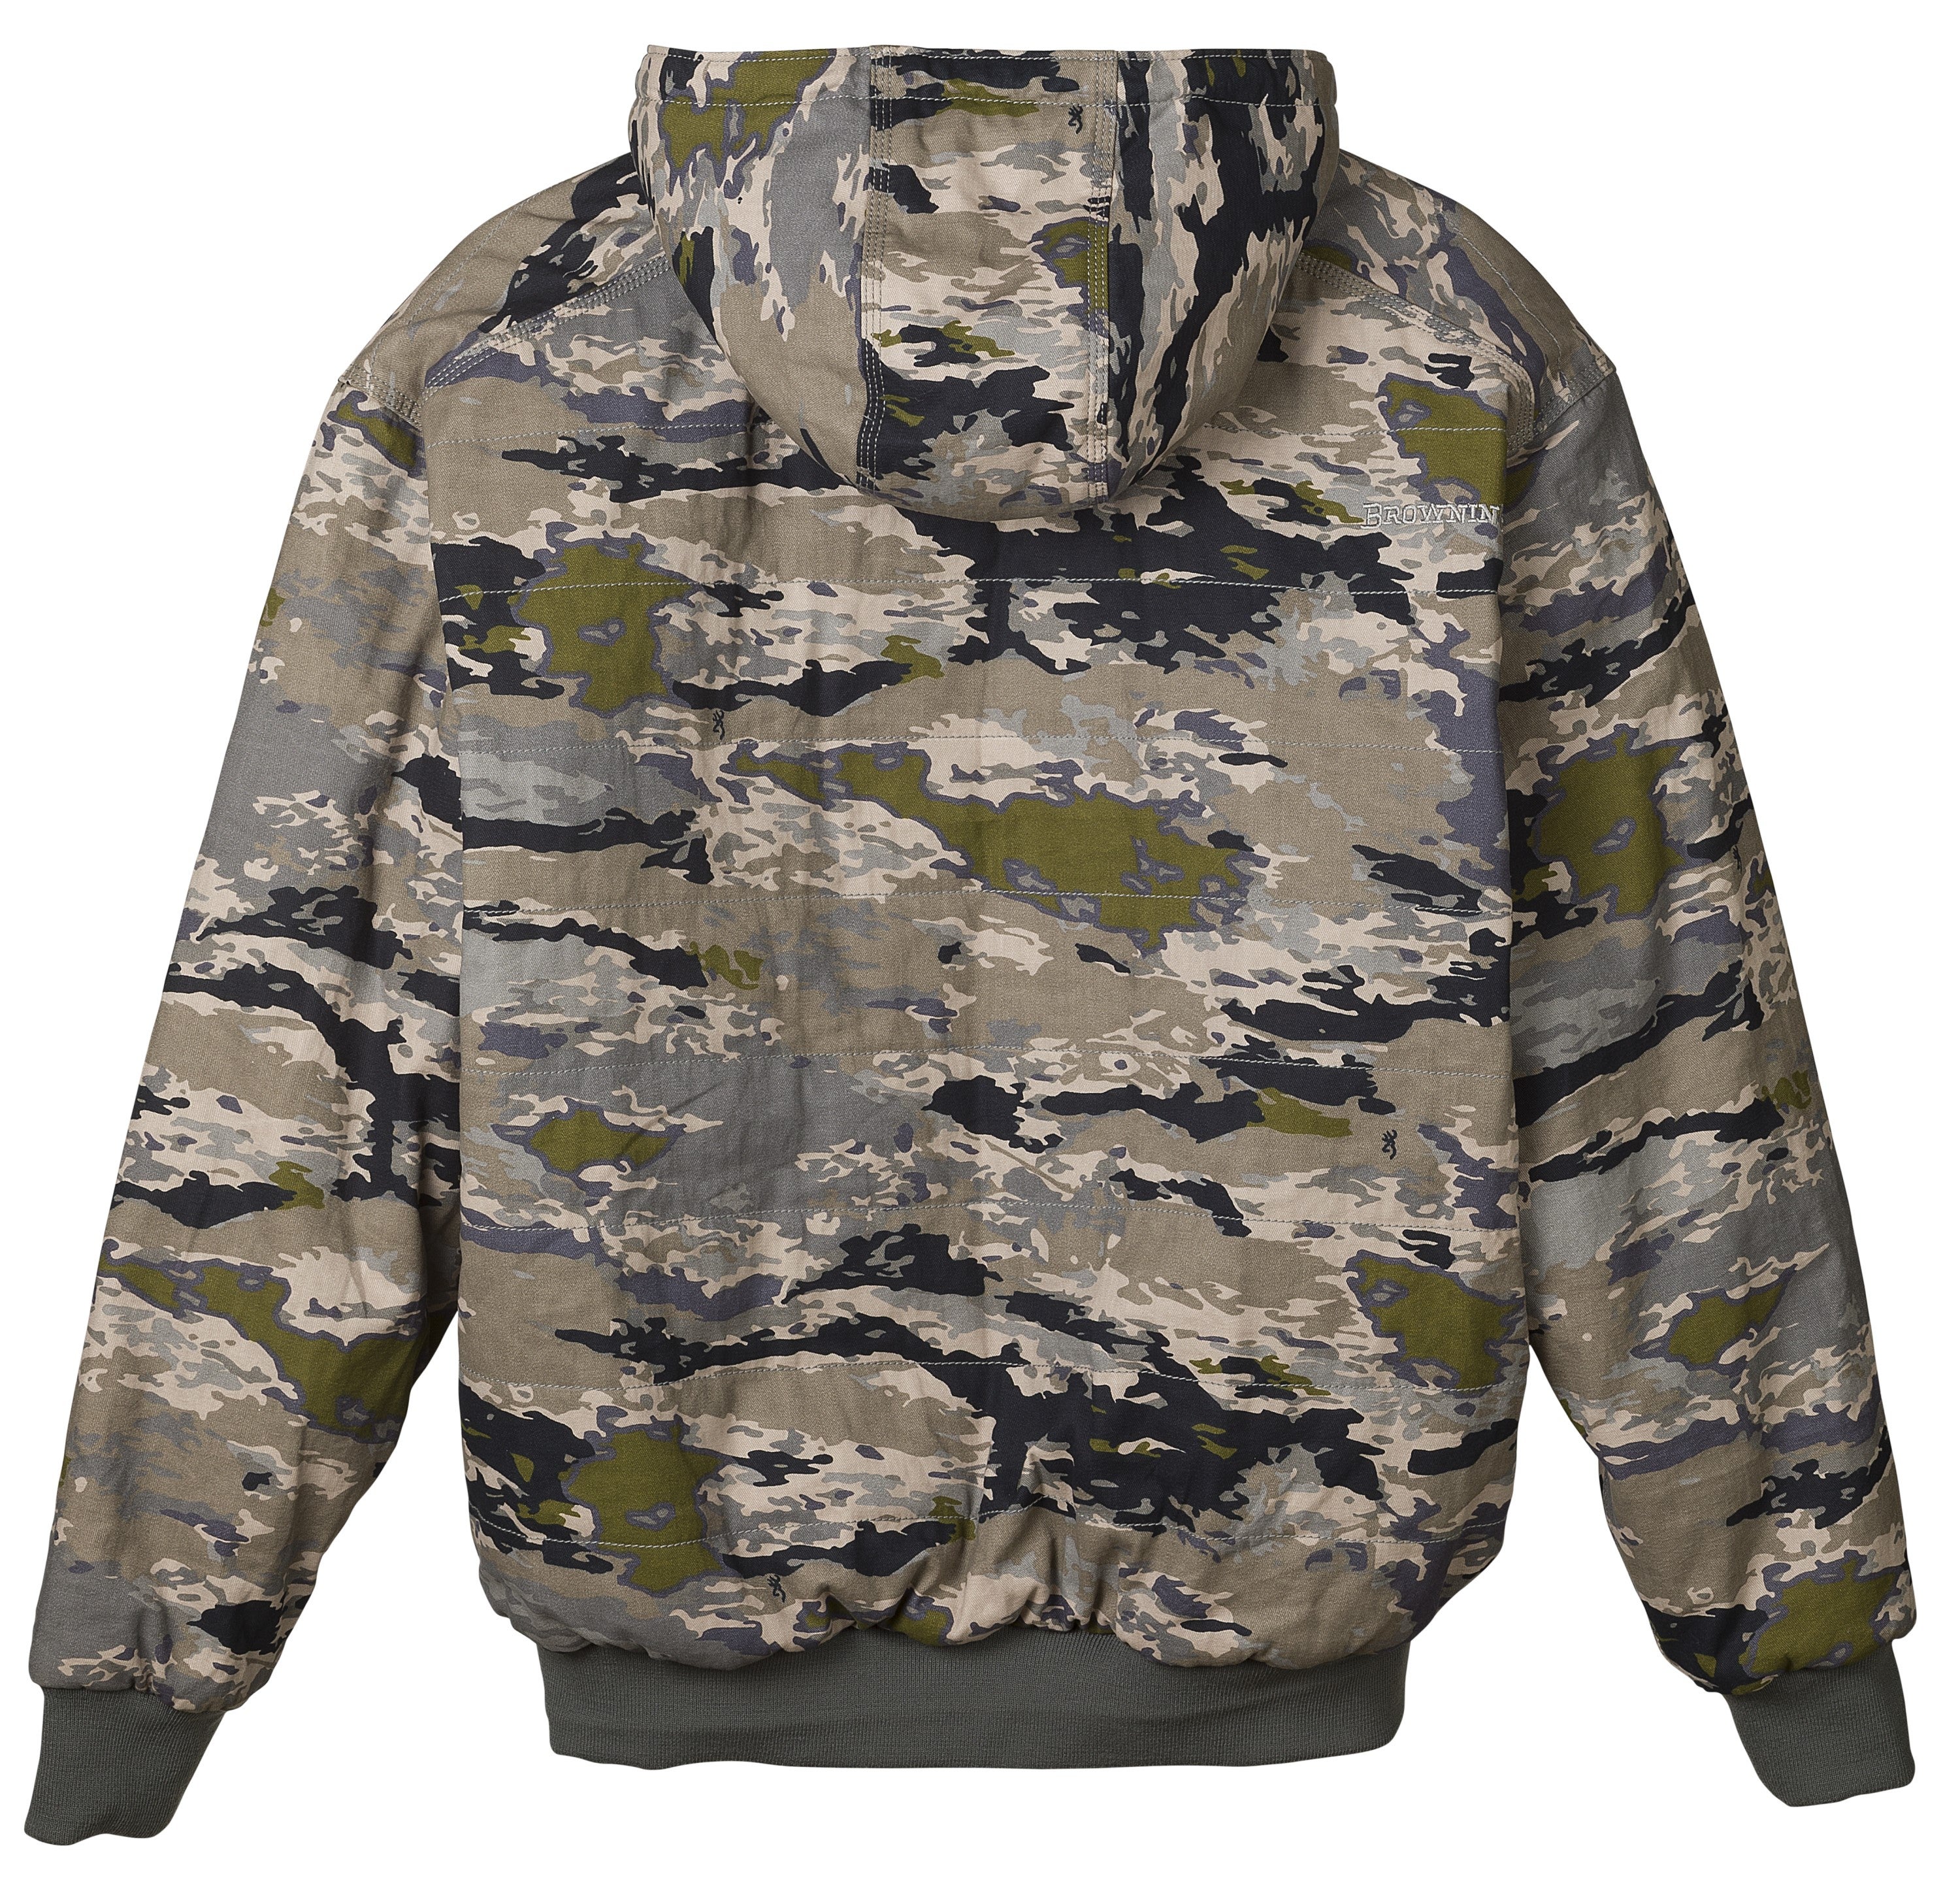 Reversible Jacket - Hunting Clothing - Browning